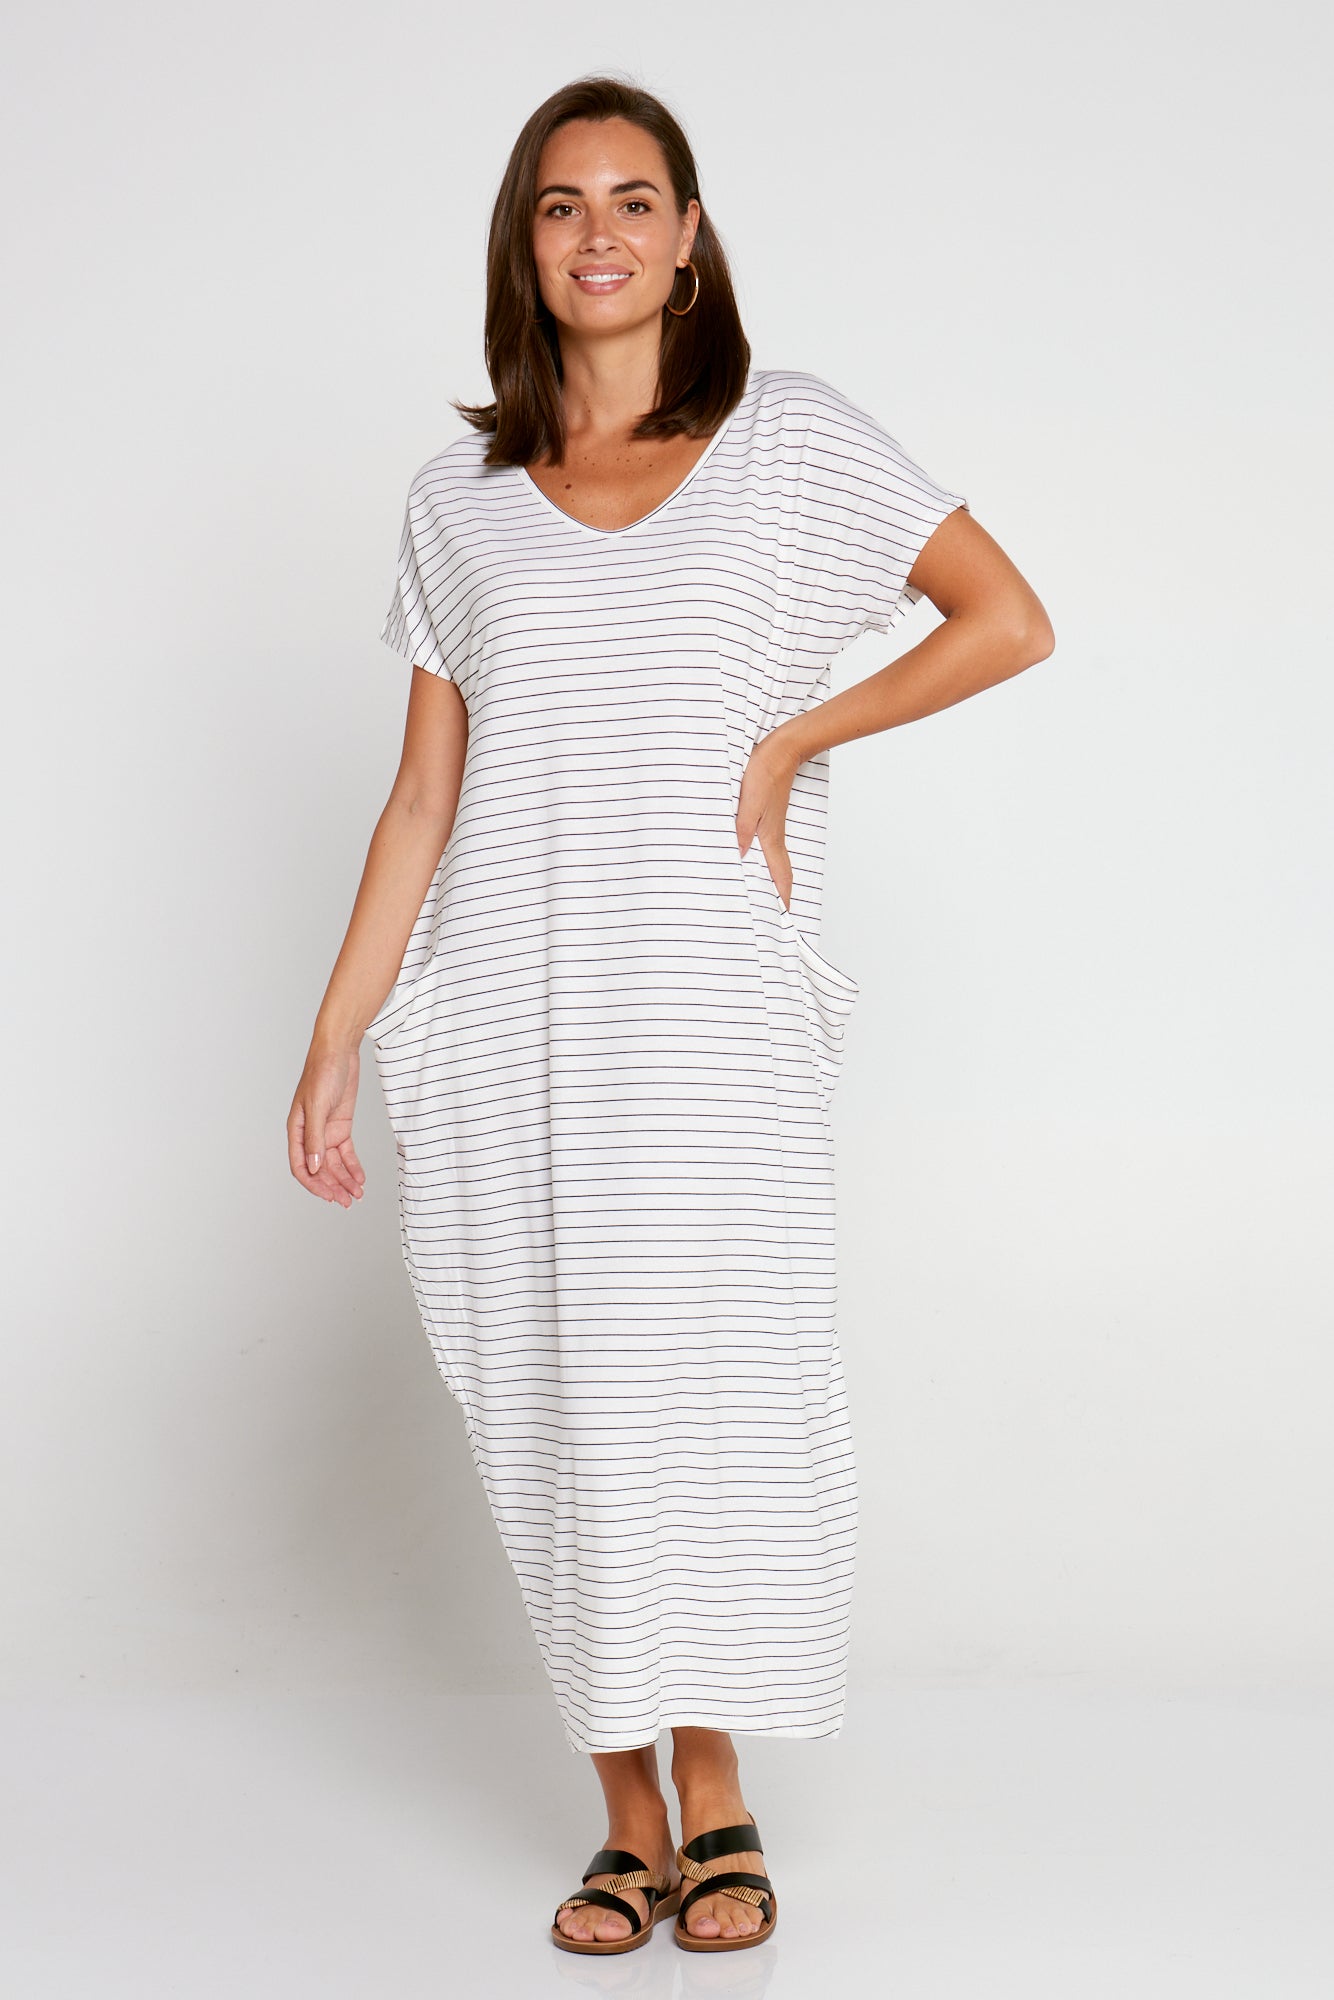 Rowan Dress - White Stripe